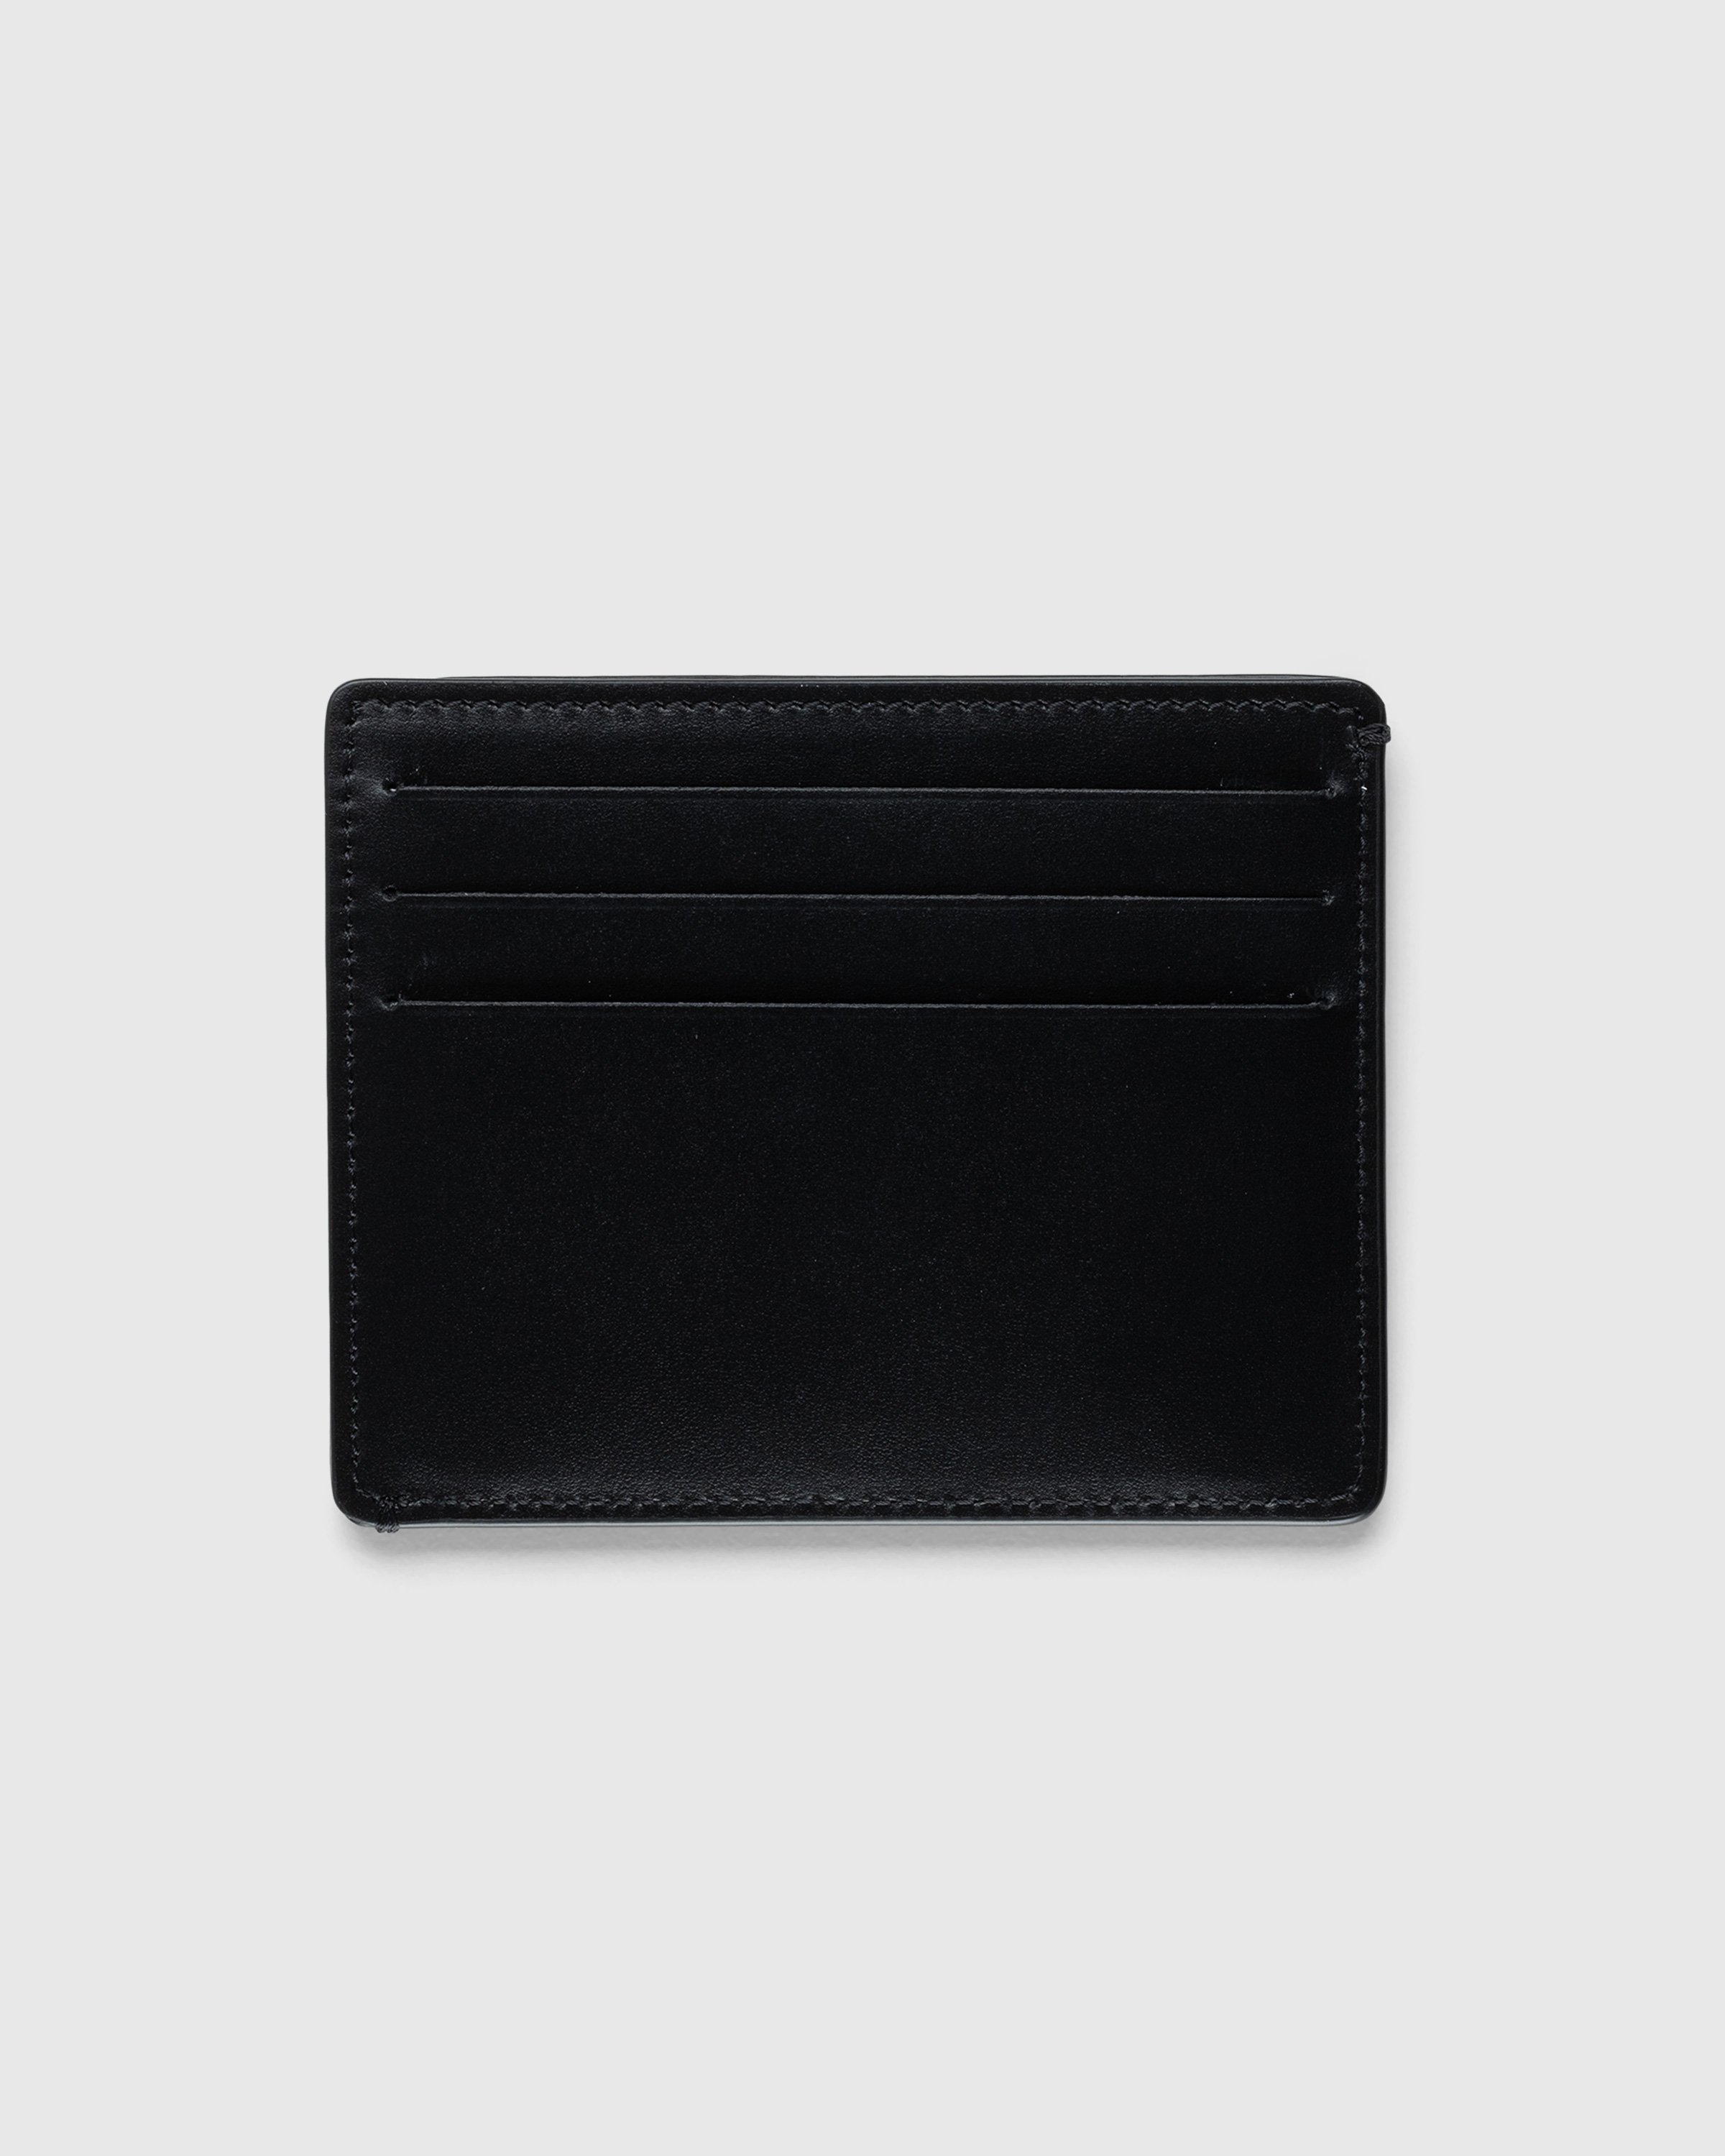 Maison Margiela - Leather Card Holder Black - Accessories - Green - Image 2